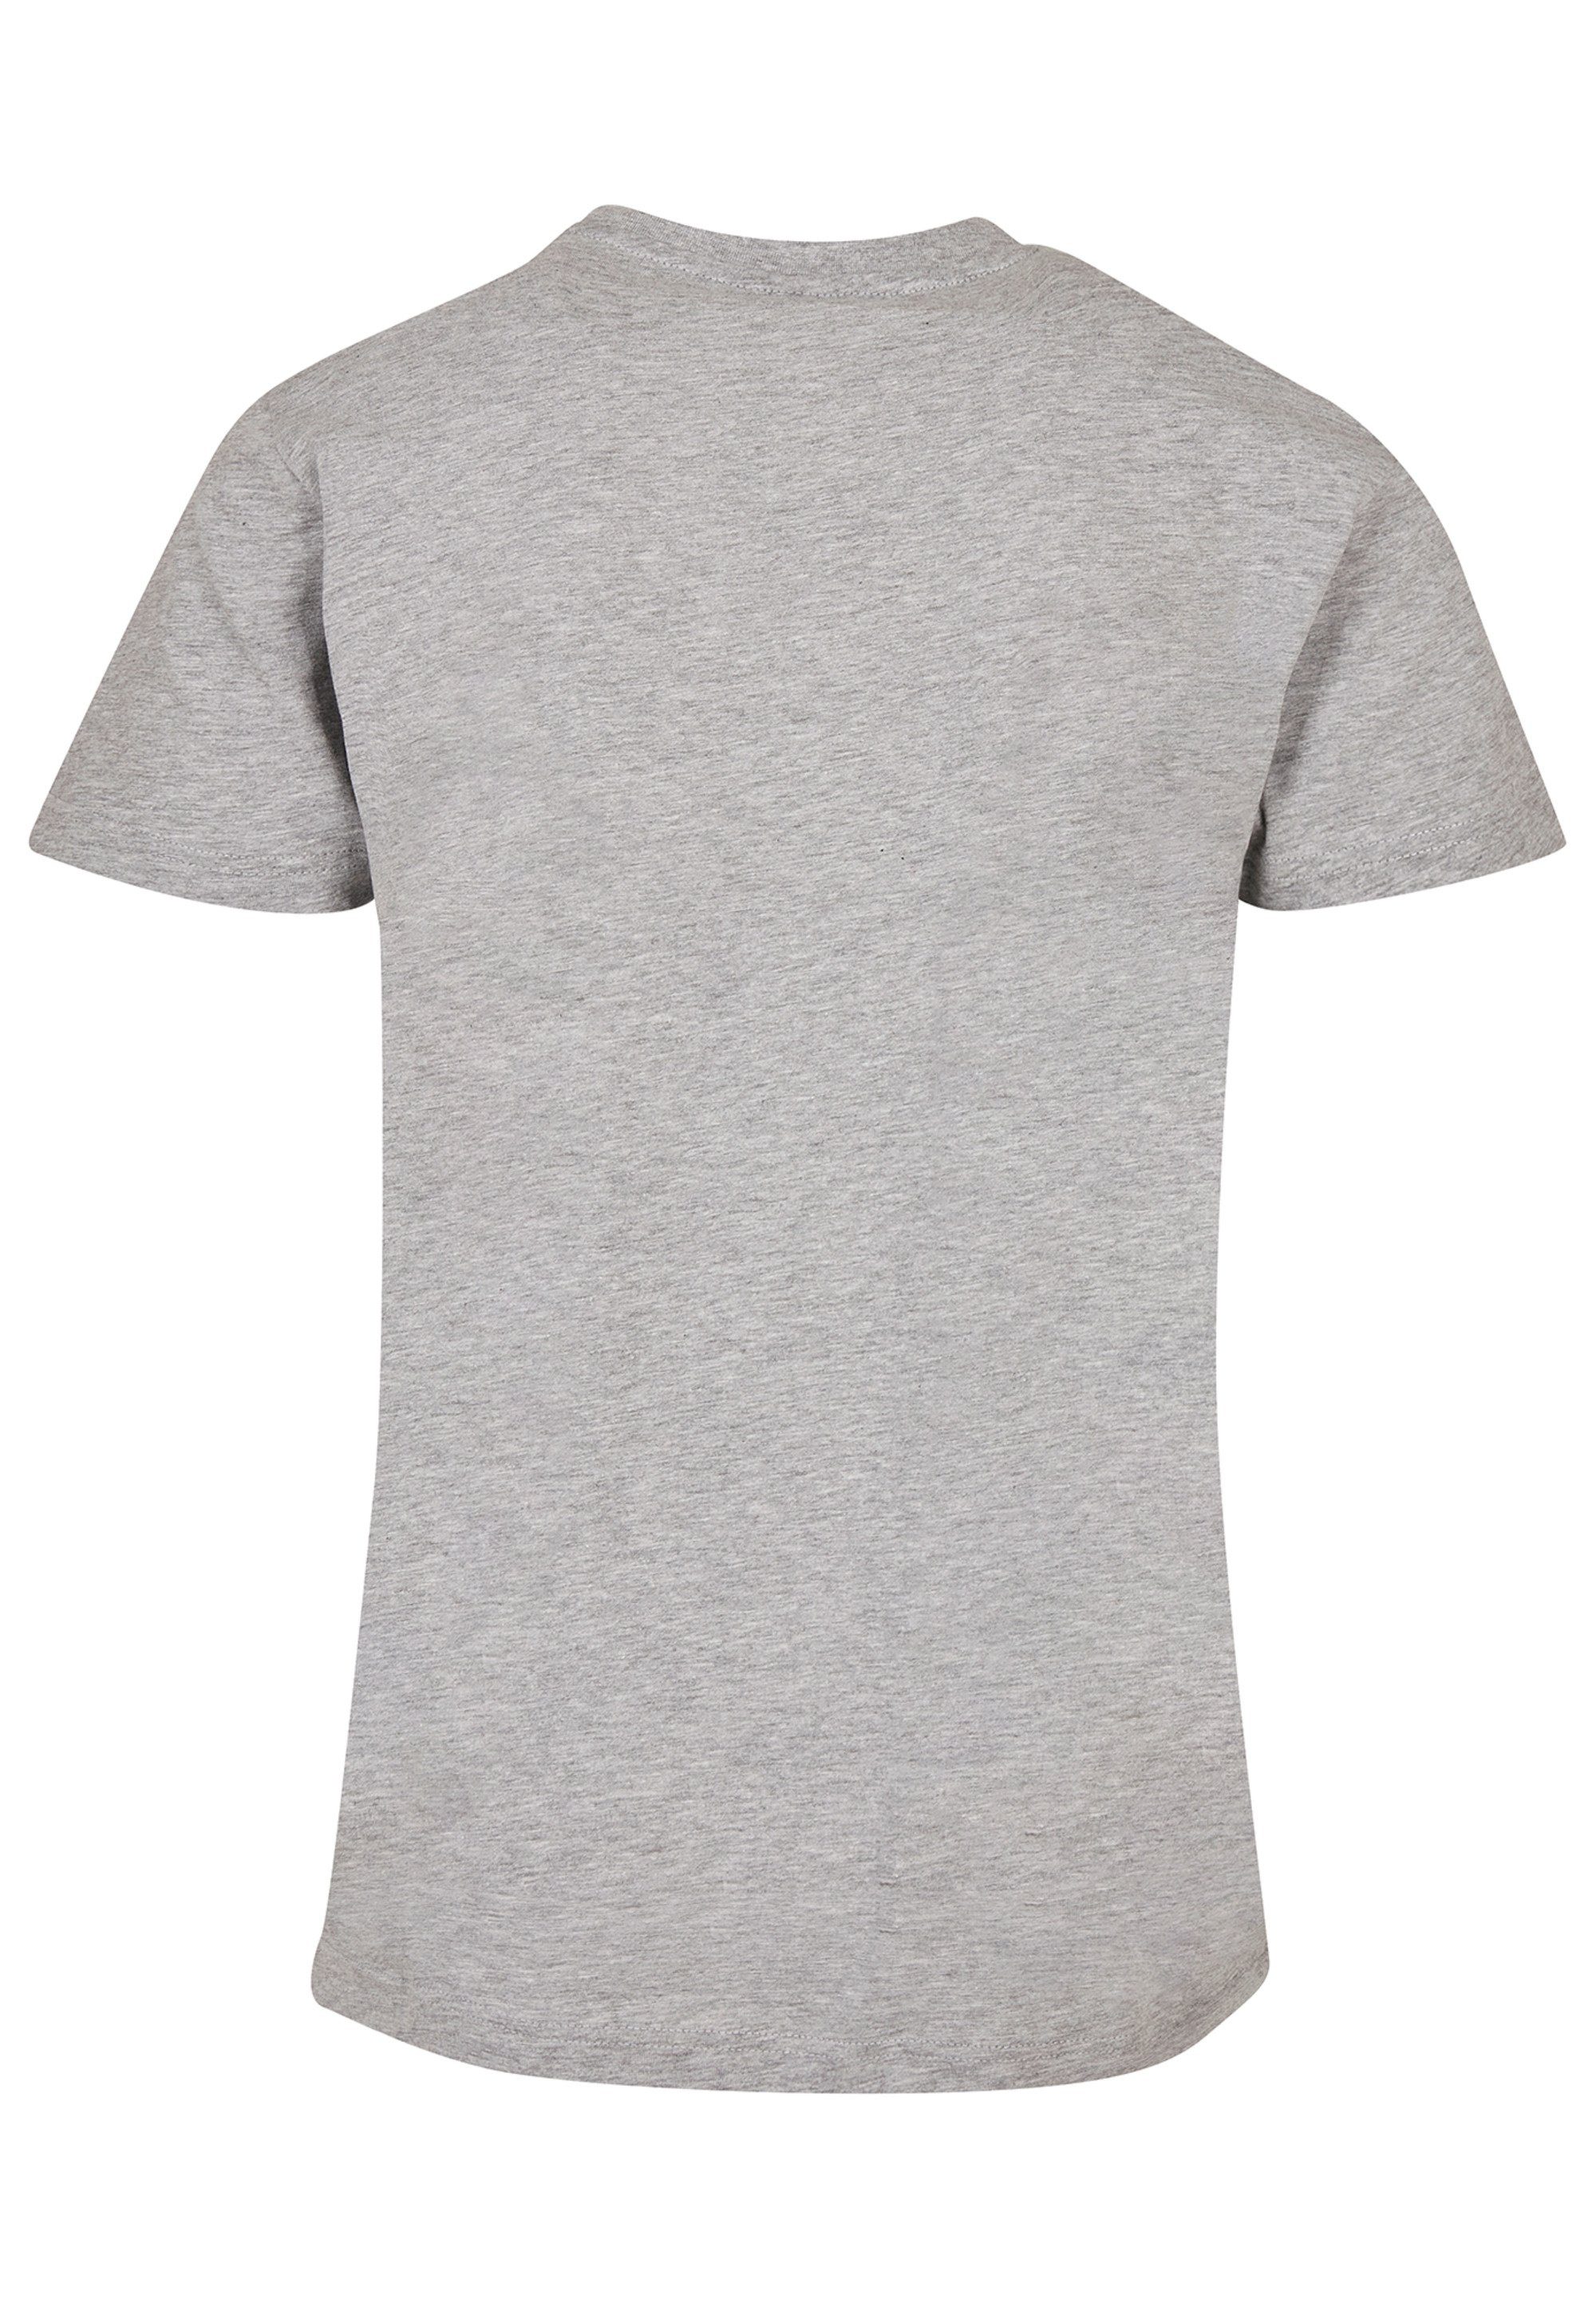 T-Shirt F4NT4STIC East Print Manhatten UNISEX Village grey TEE heather